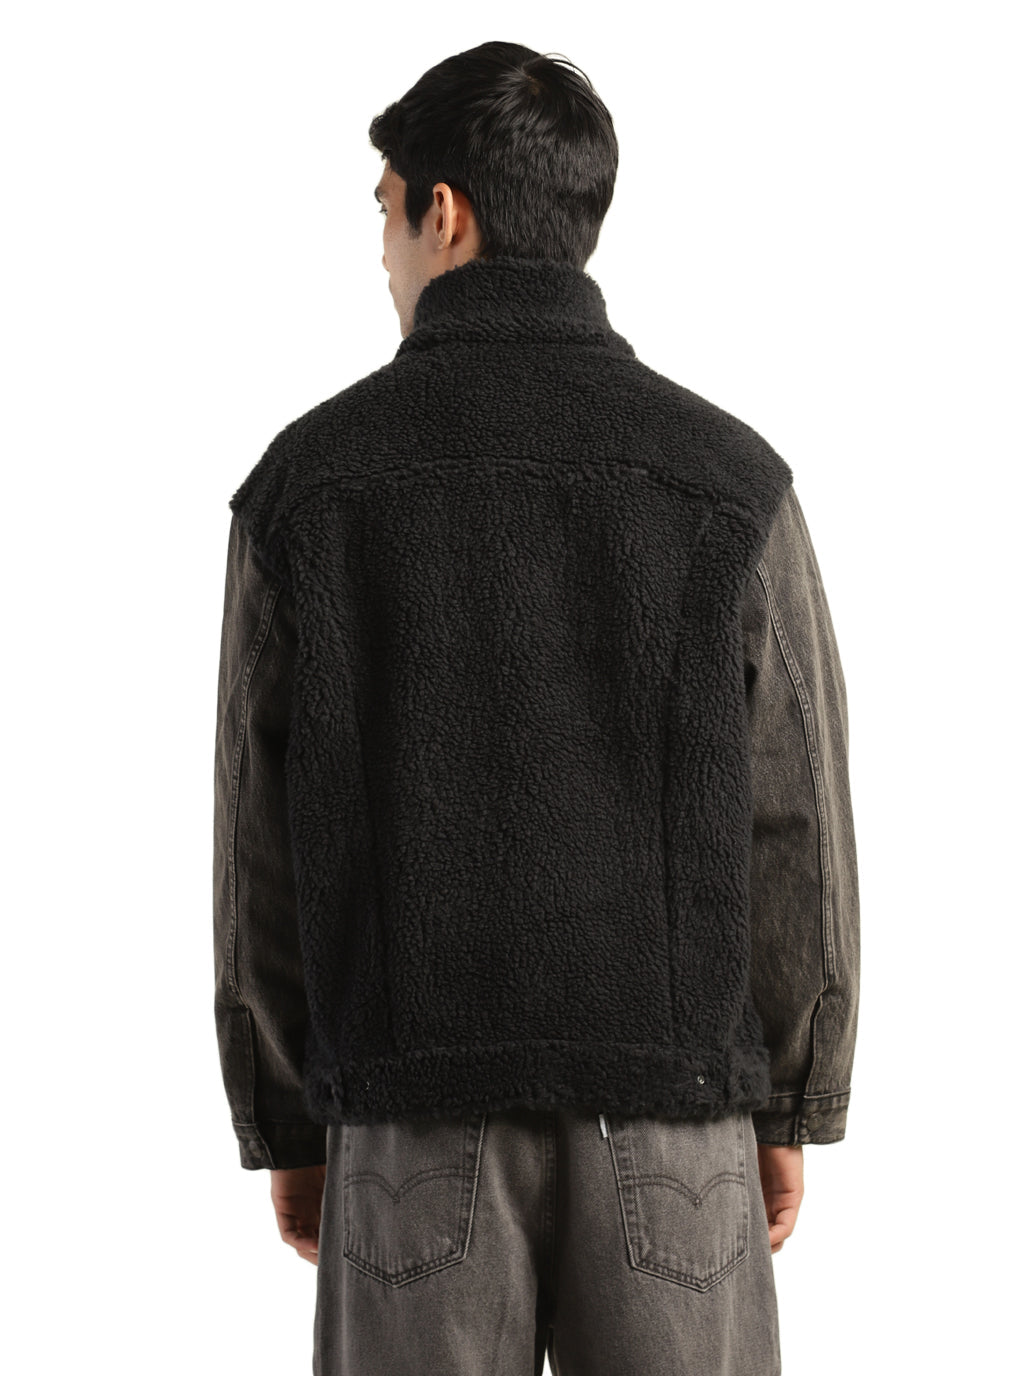 Men's Colorblock Black Collar Neck Jacket